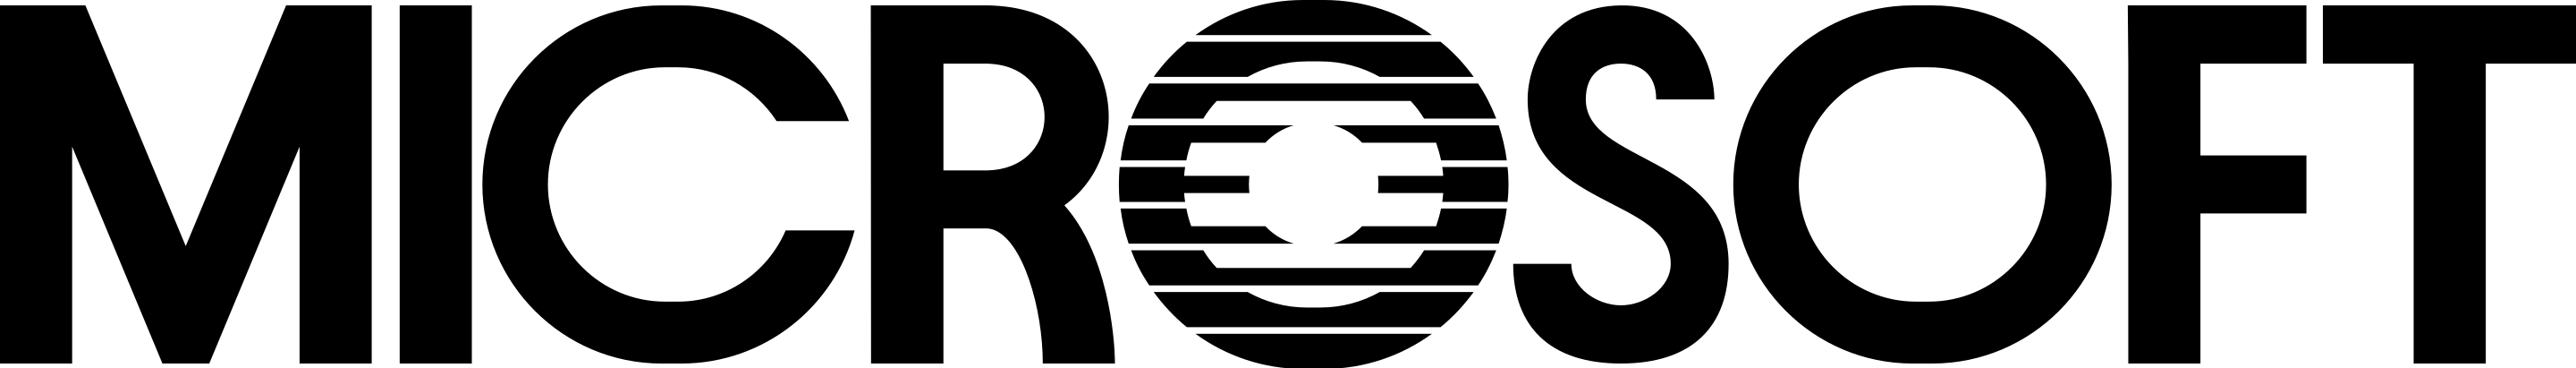  Third Microsoft logo, in 1982